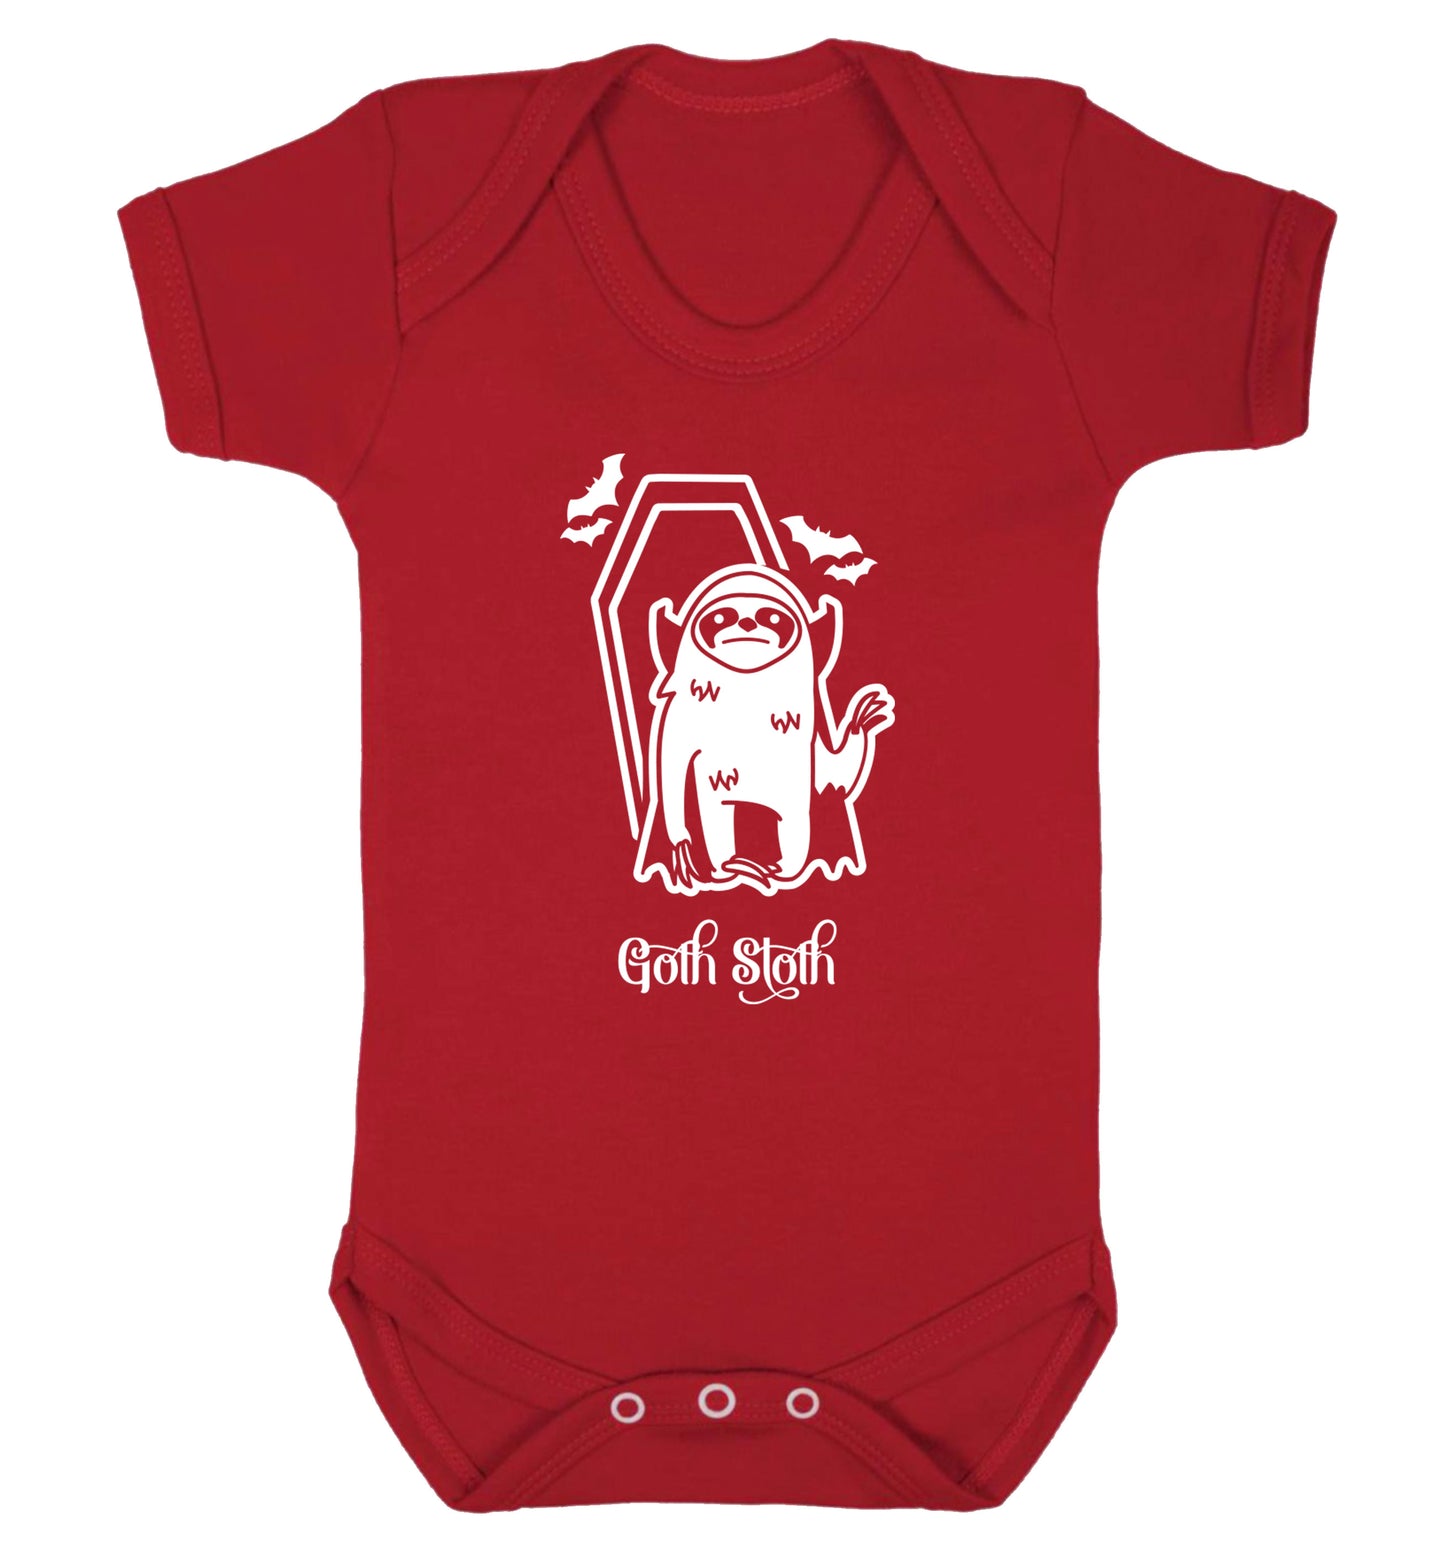 Goth Sloth Baby Vest red 18-24 months